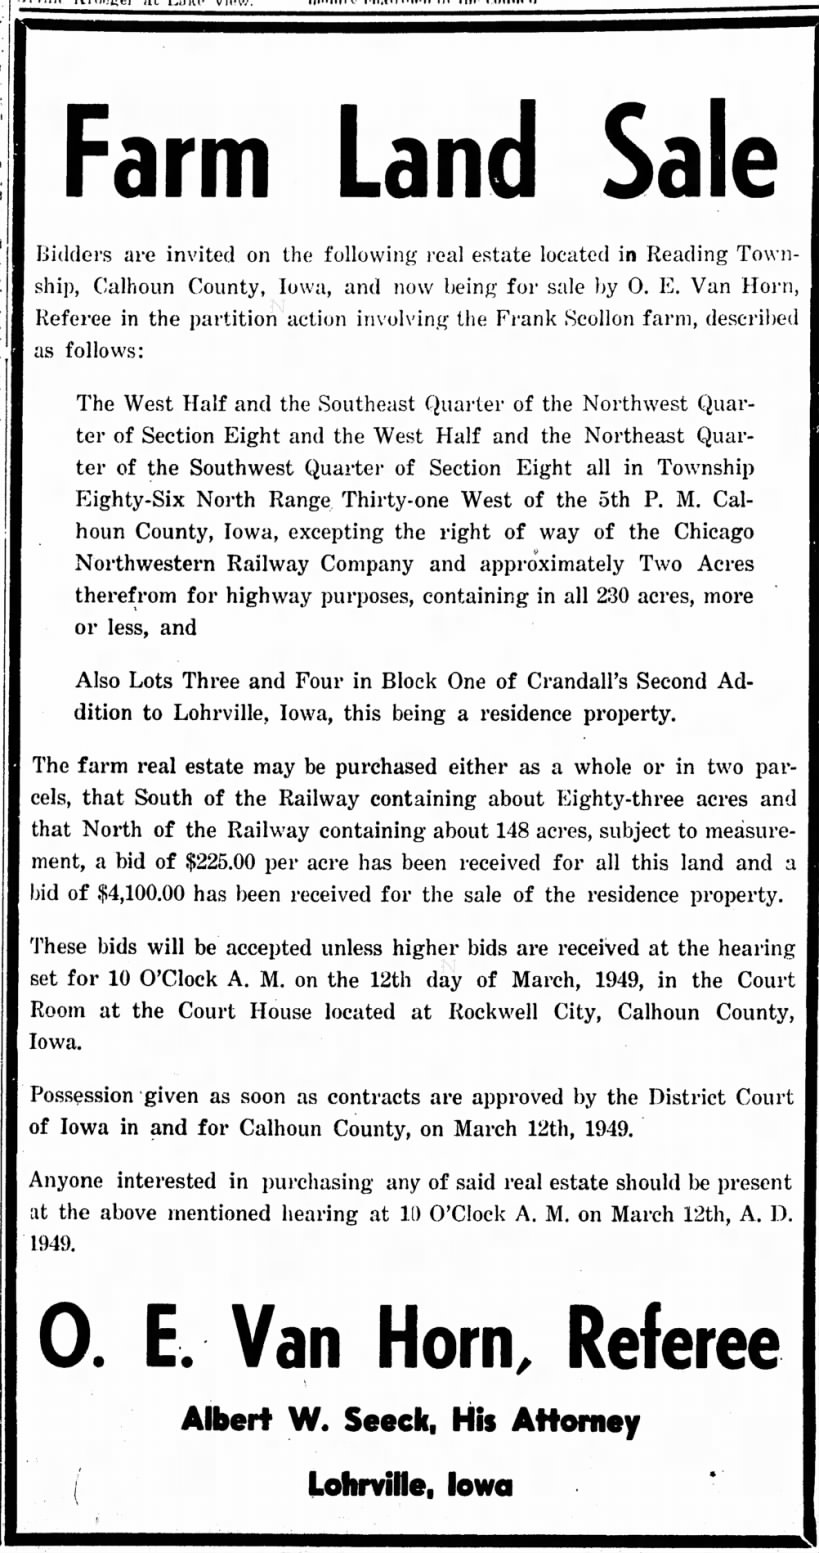 Carrol Daily Times Herald
Carroll, Iowa
Saturday, March 5, 1949 p5